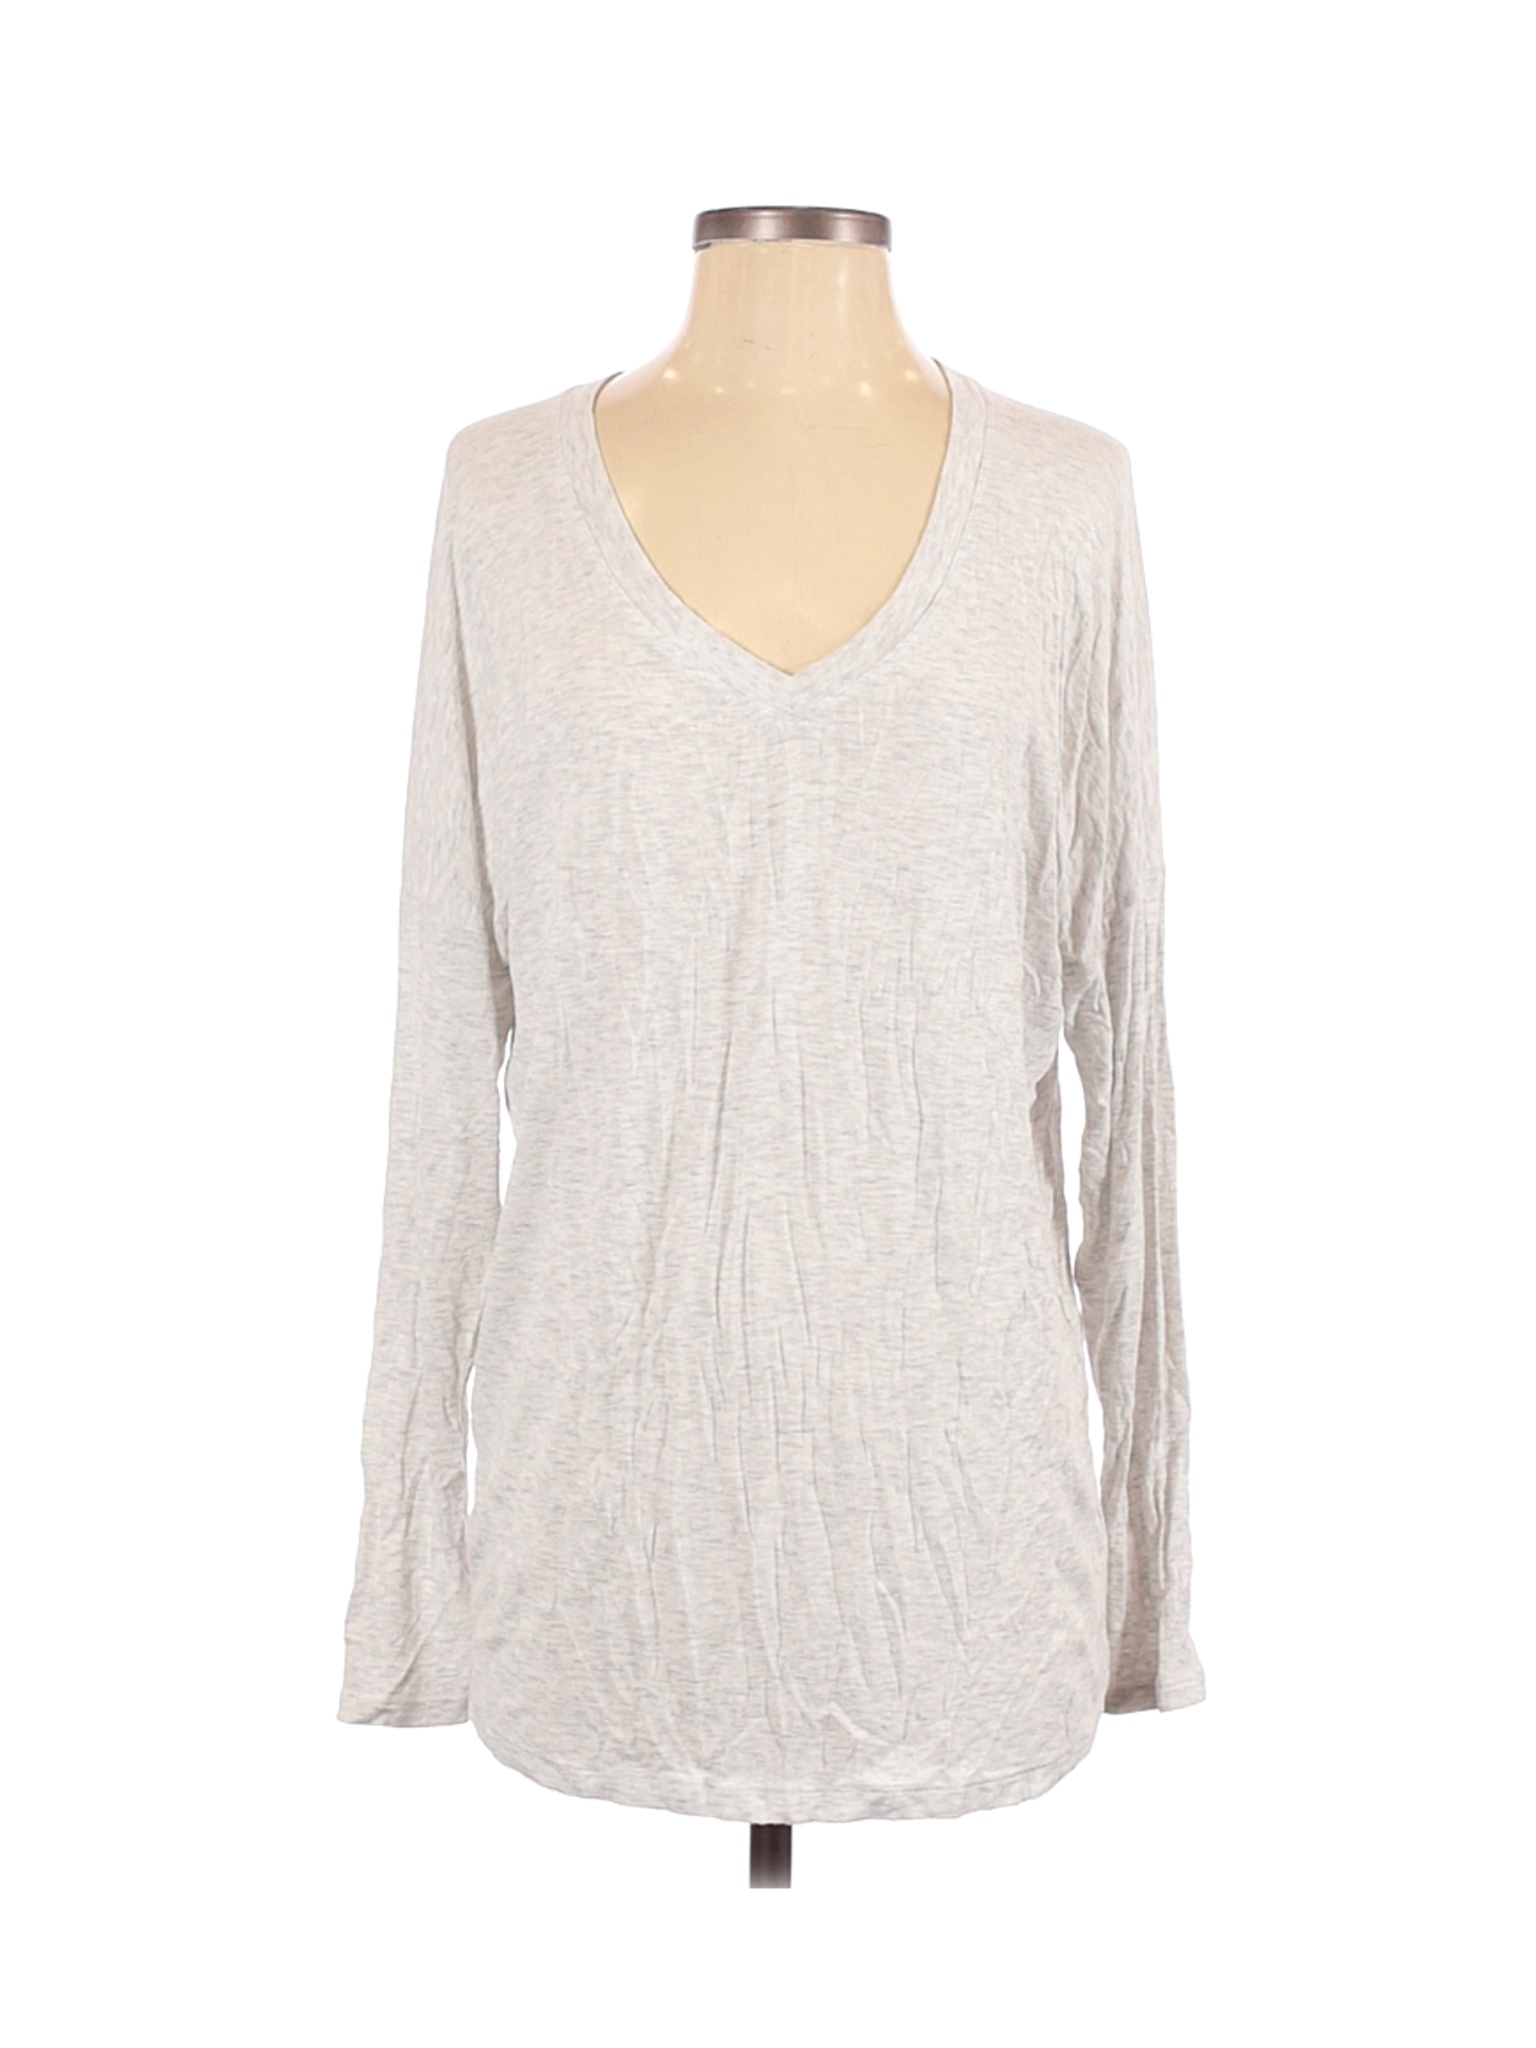 CAbi Women Gray Pullover Sweater S | eBay